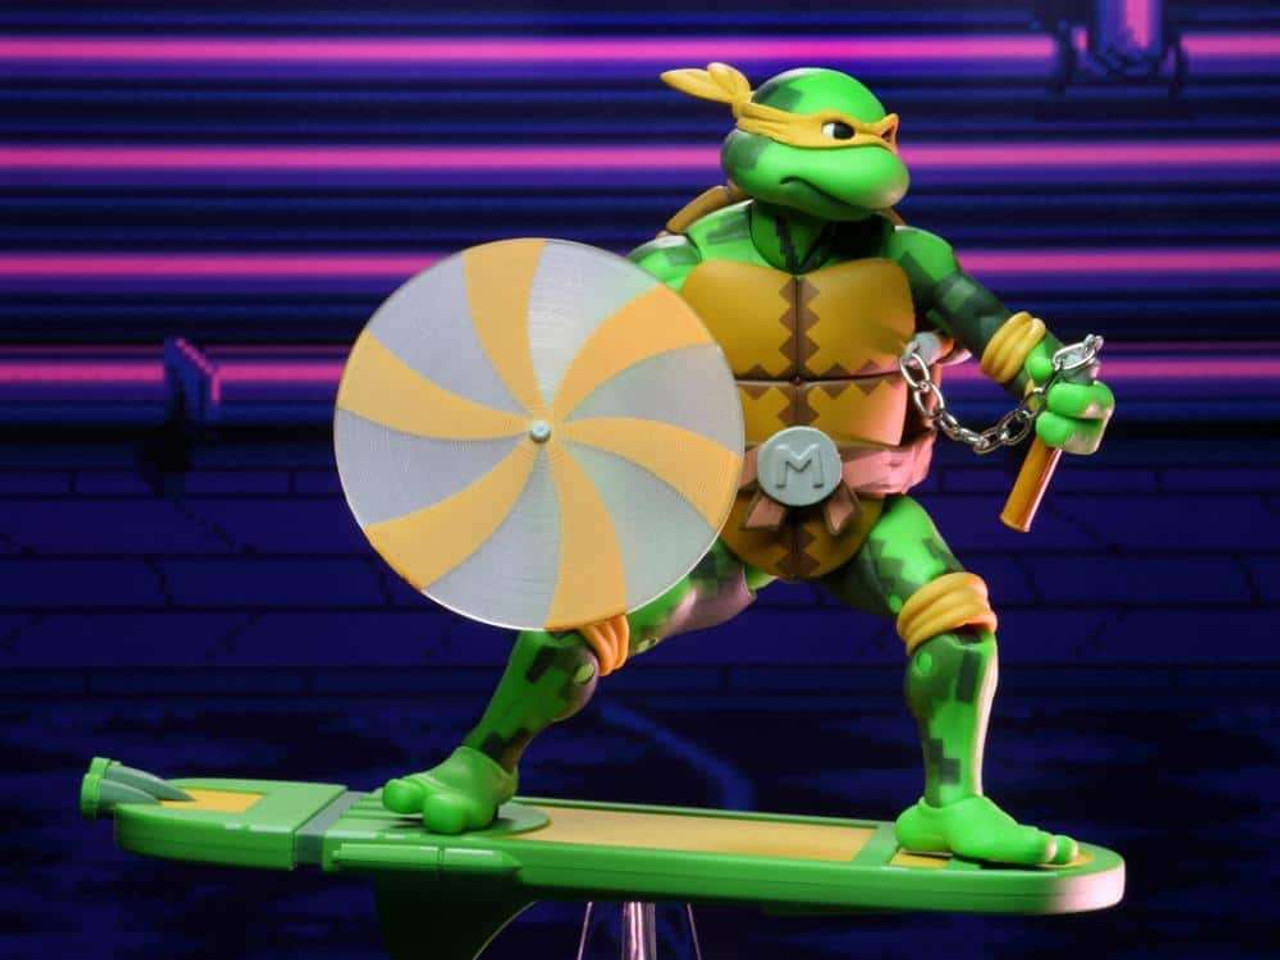 NECA Teenage Mutant Ninja Turtles Deluxe Super Shredder 7 Action Figure  TMNT